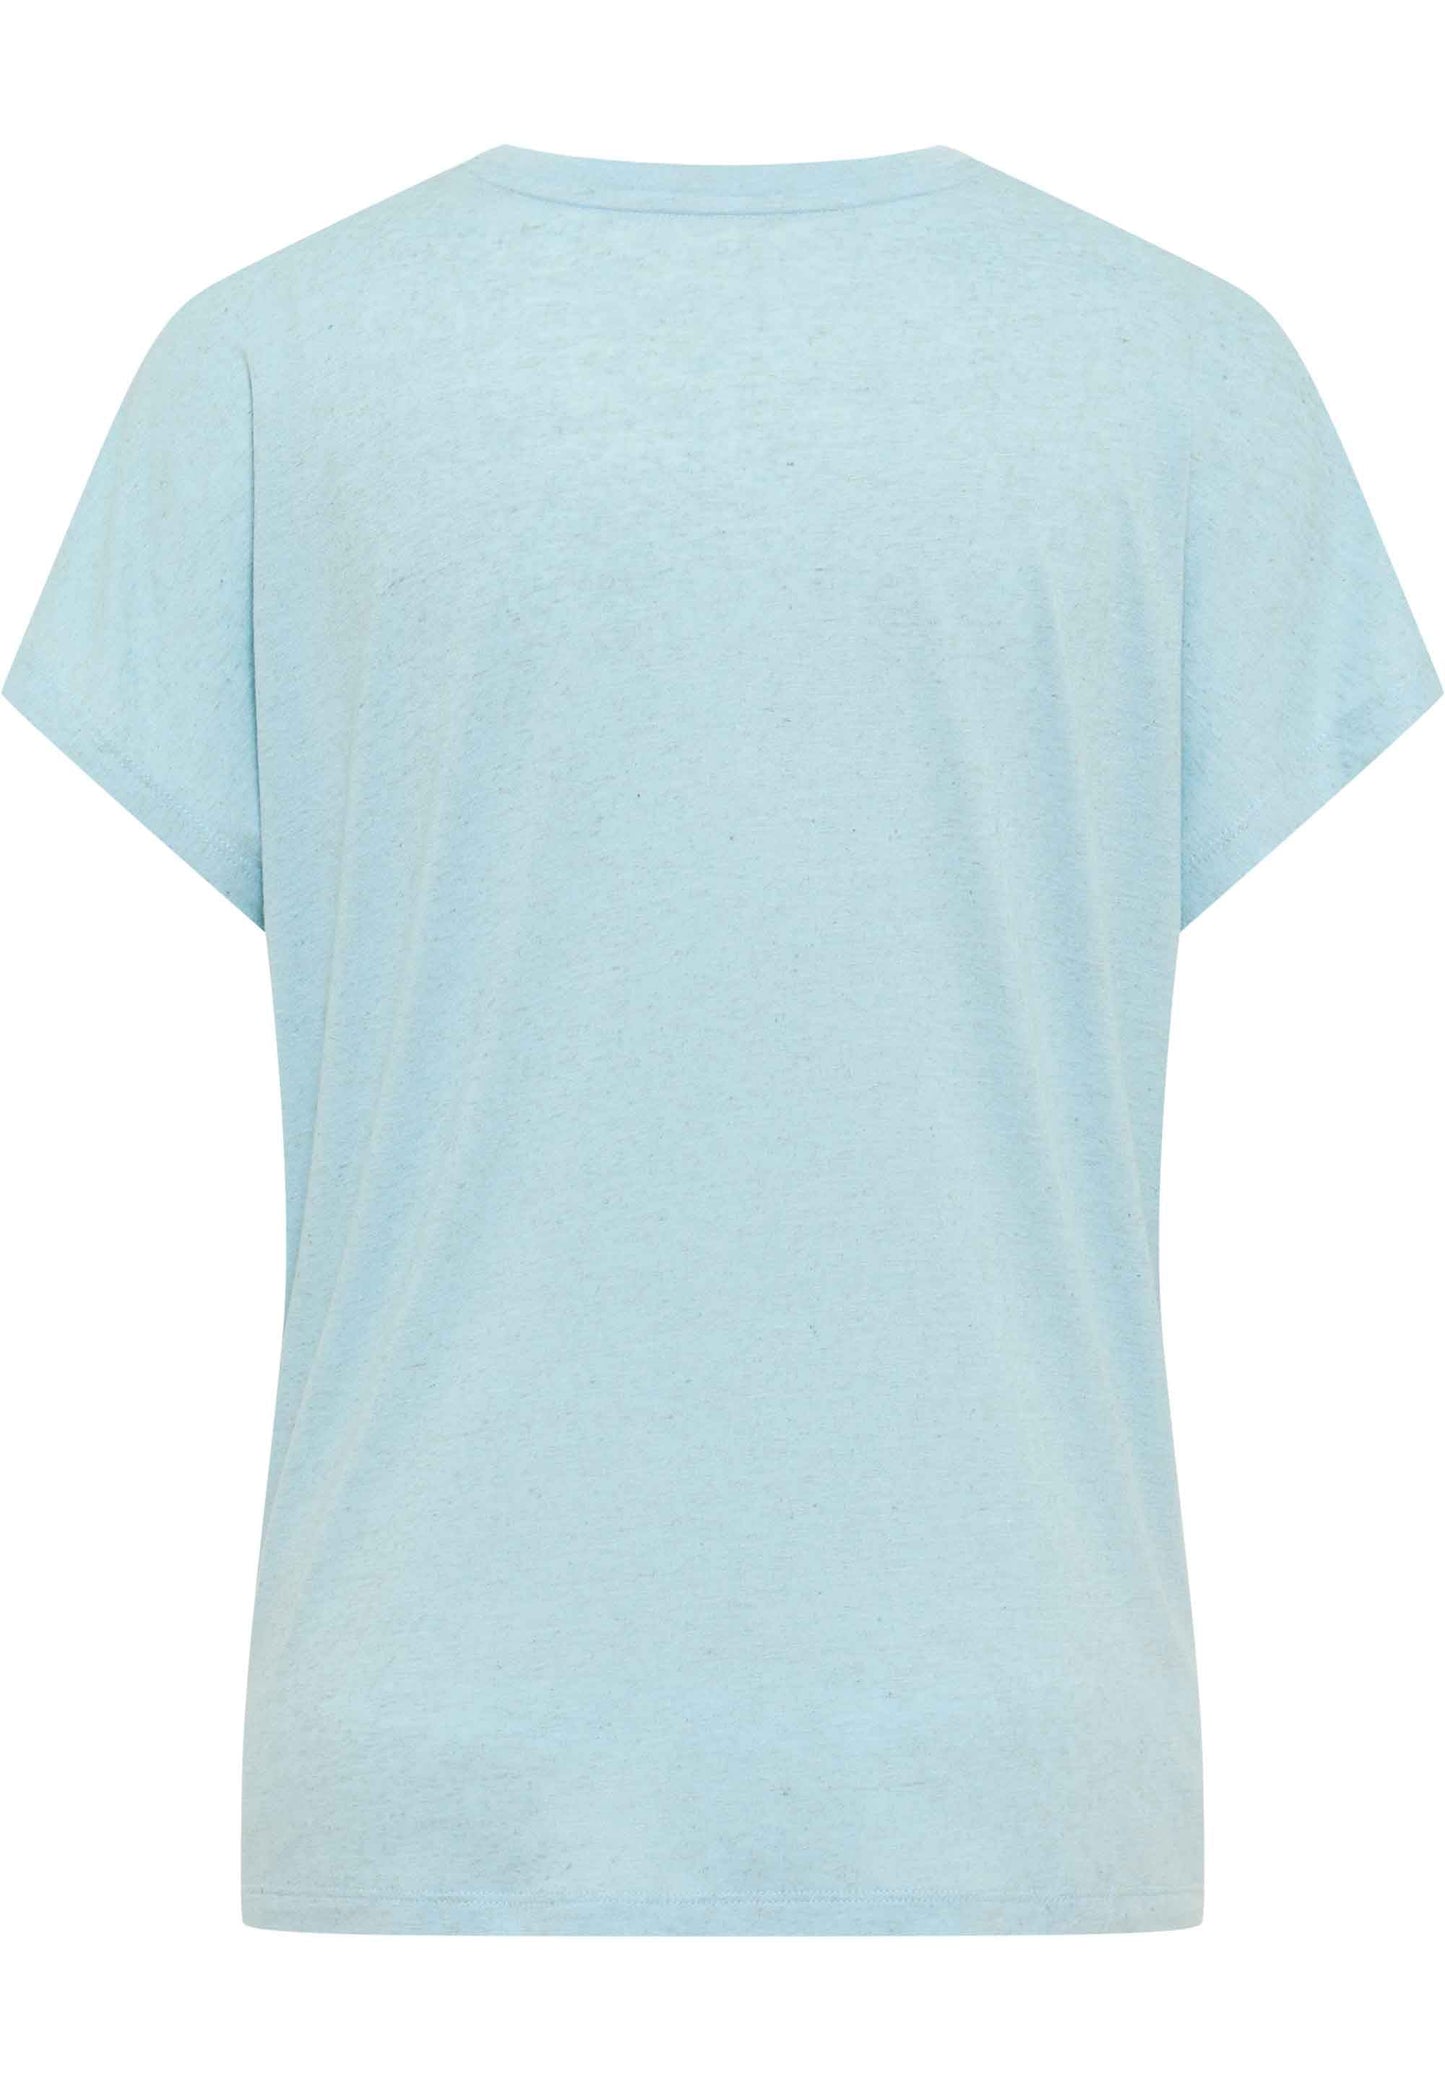 SOMWR IMMERGE T-Shirt BLU001